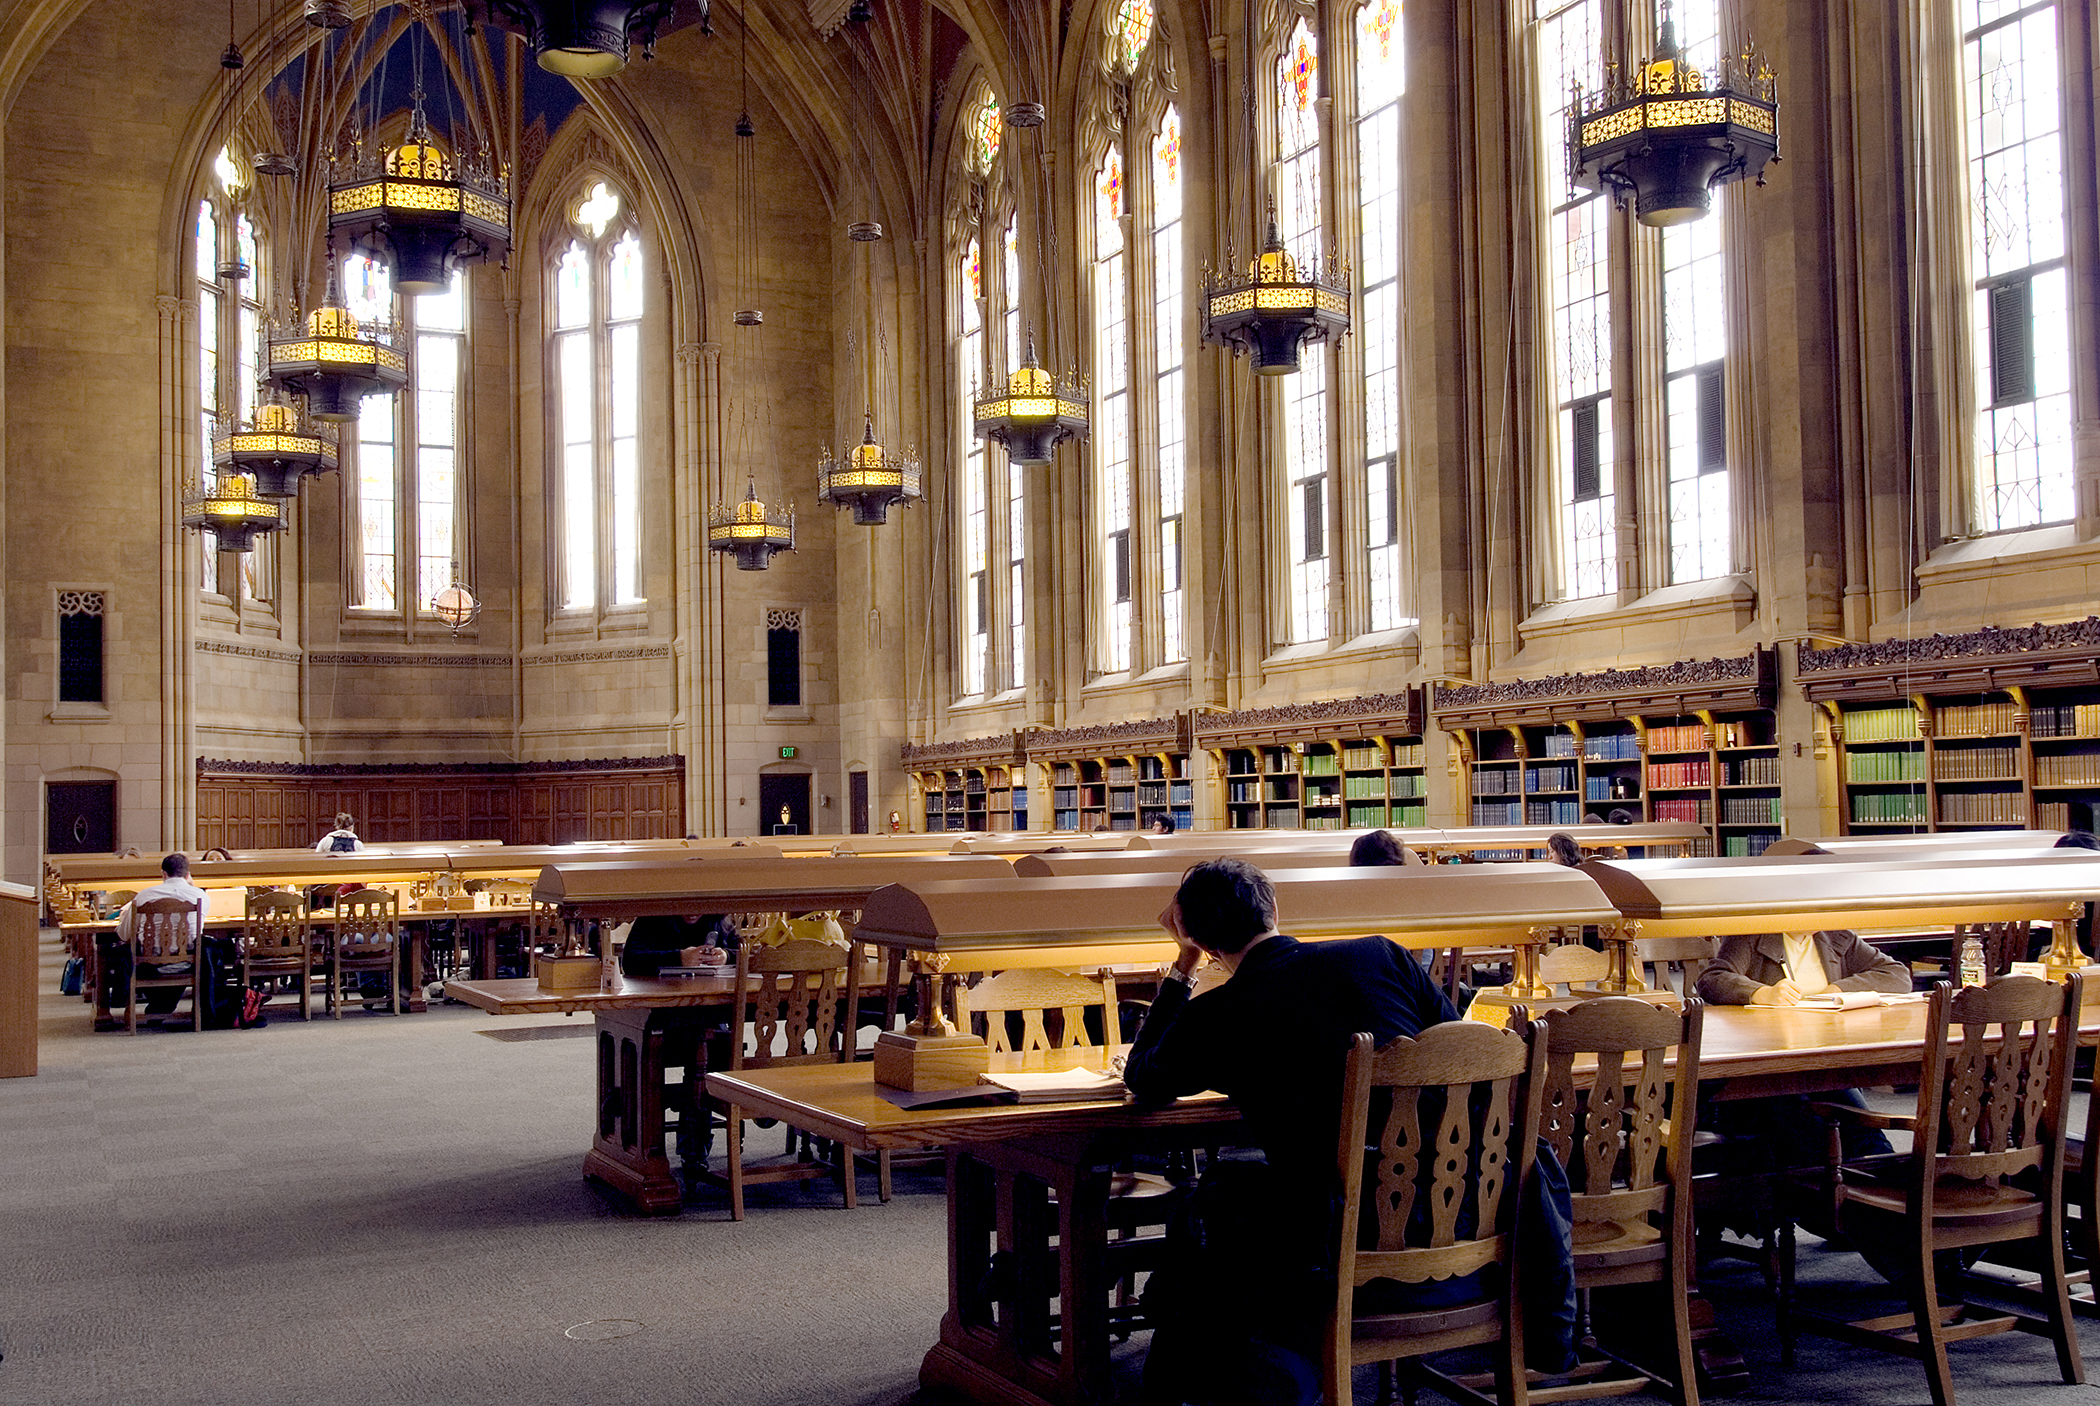 Suzzallo Library interior, University of Washington